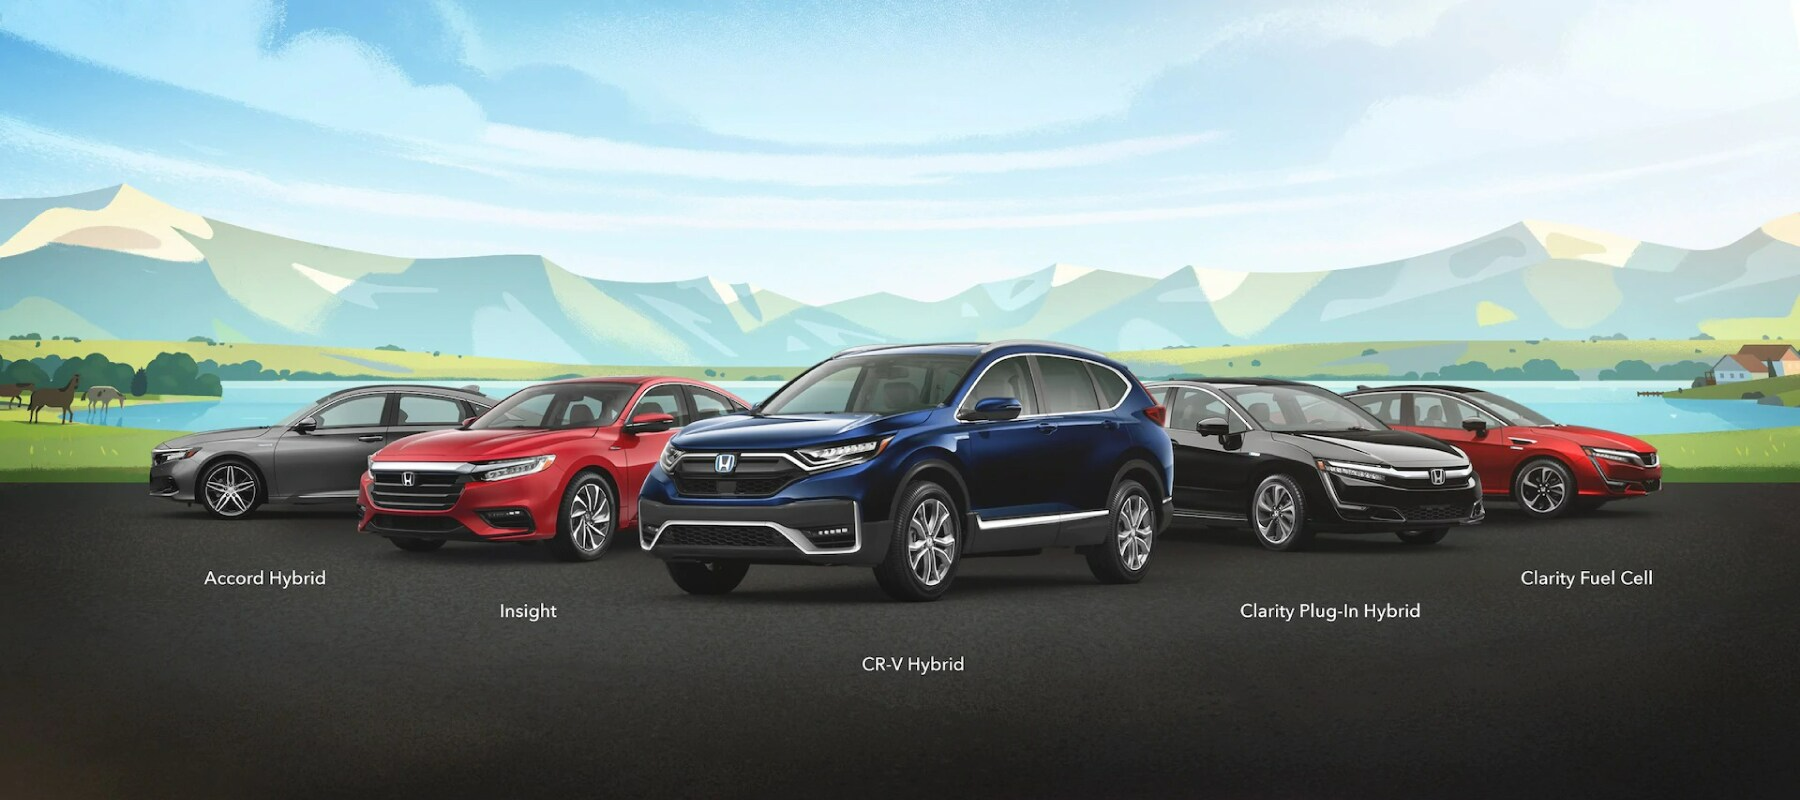 Honda EVs and Hybrid Models- Accord Hybrid, Insight, CR-V Hybrid, Clarity Plug-in Hybrid, Clarity Fuel Cell